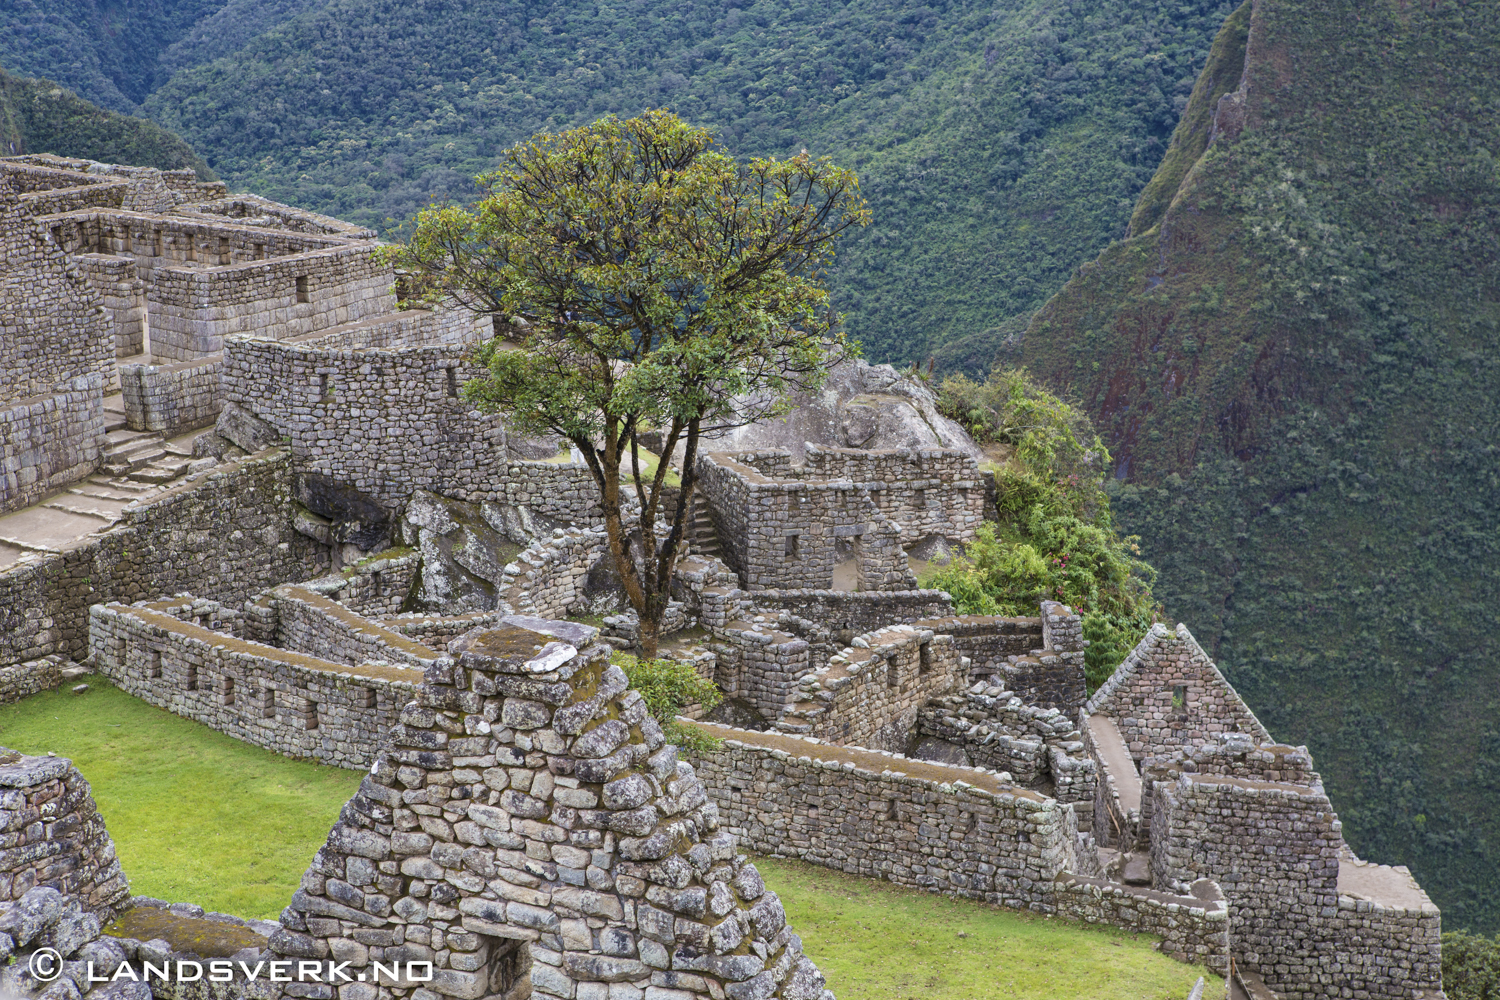 Machu Picchu, Peru. 

(Canon EOS 5D Mark III / Canon EF 24-70mm 
f/2.8 L USM)